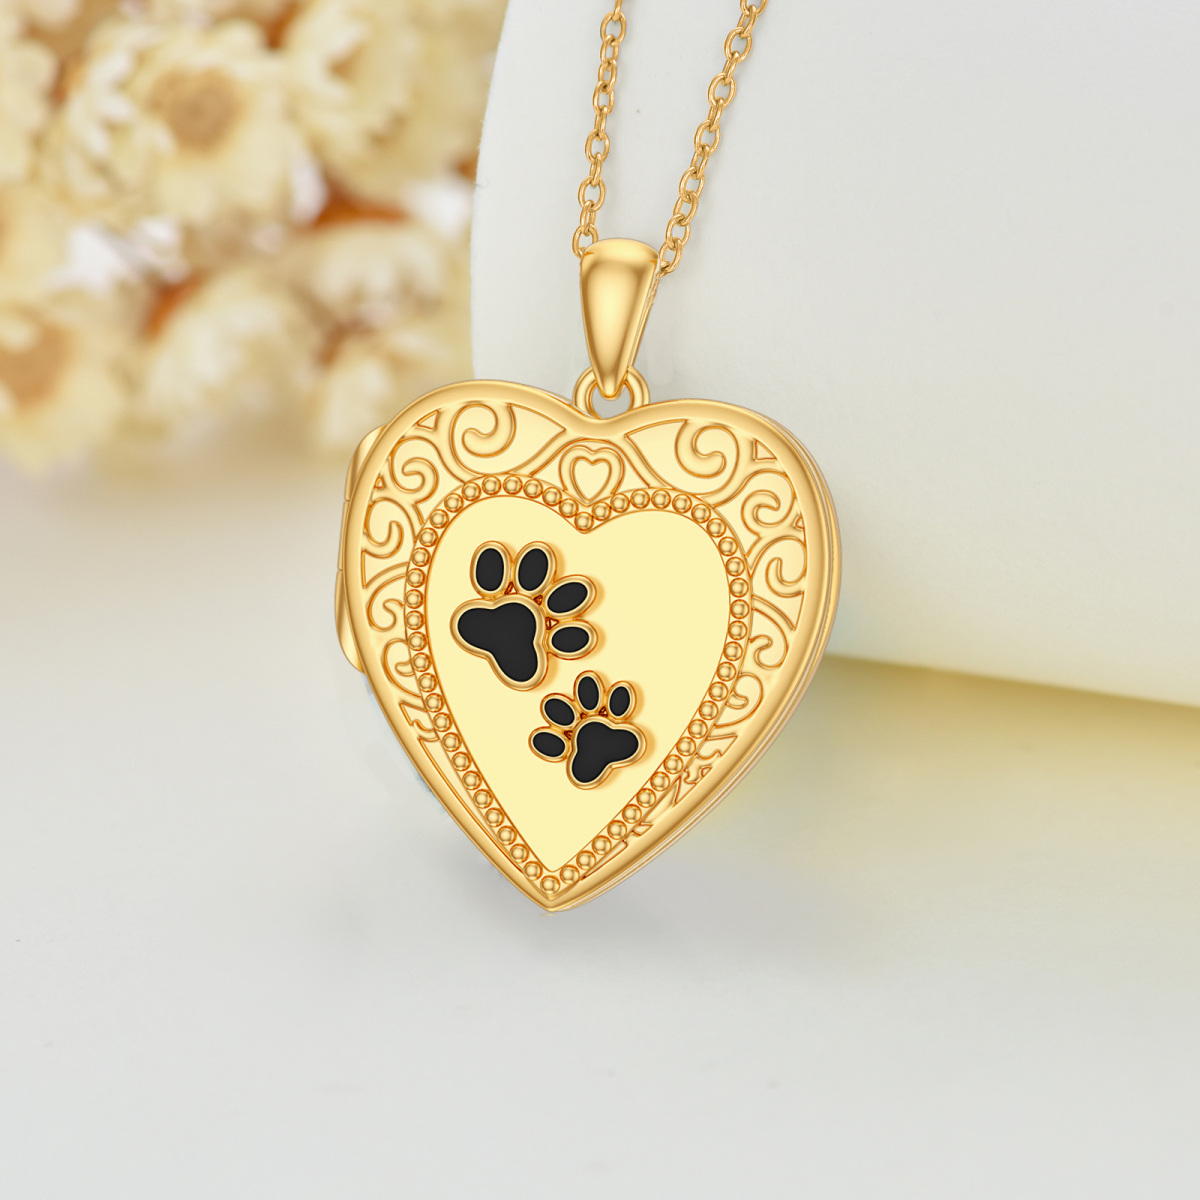 10K Gold Paw & Heart Pendant Personalized Photo Locket Necklace-6